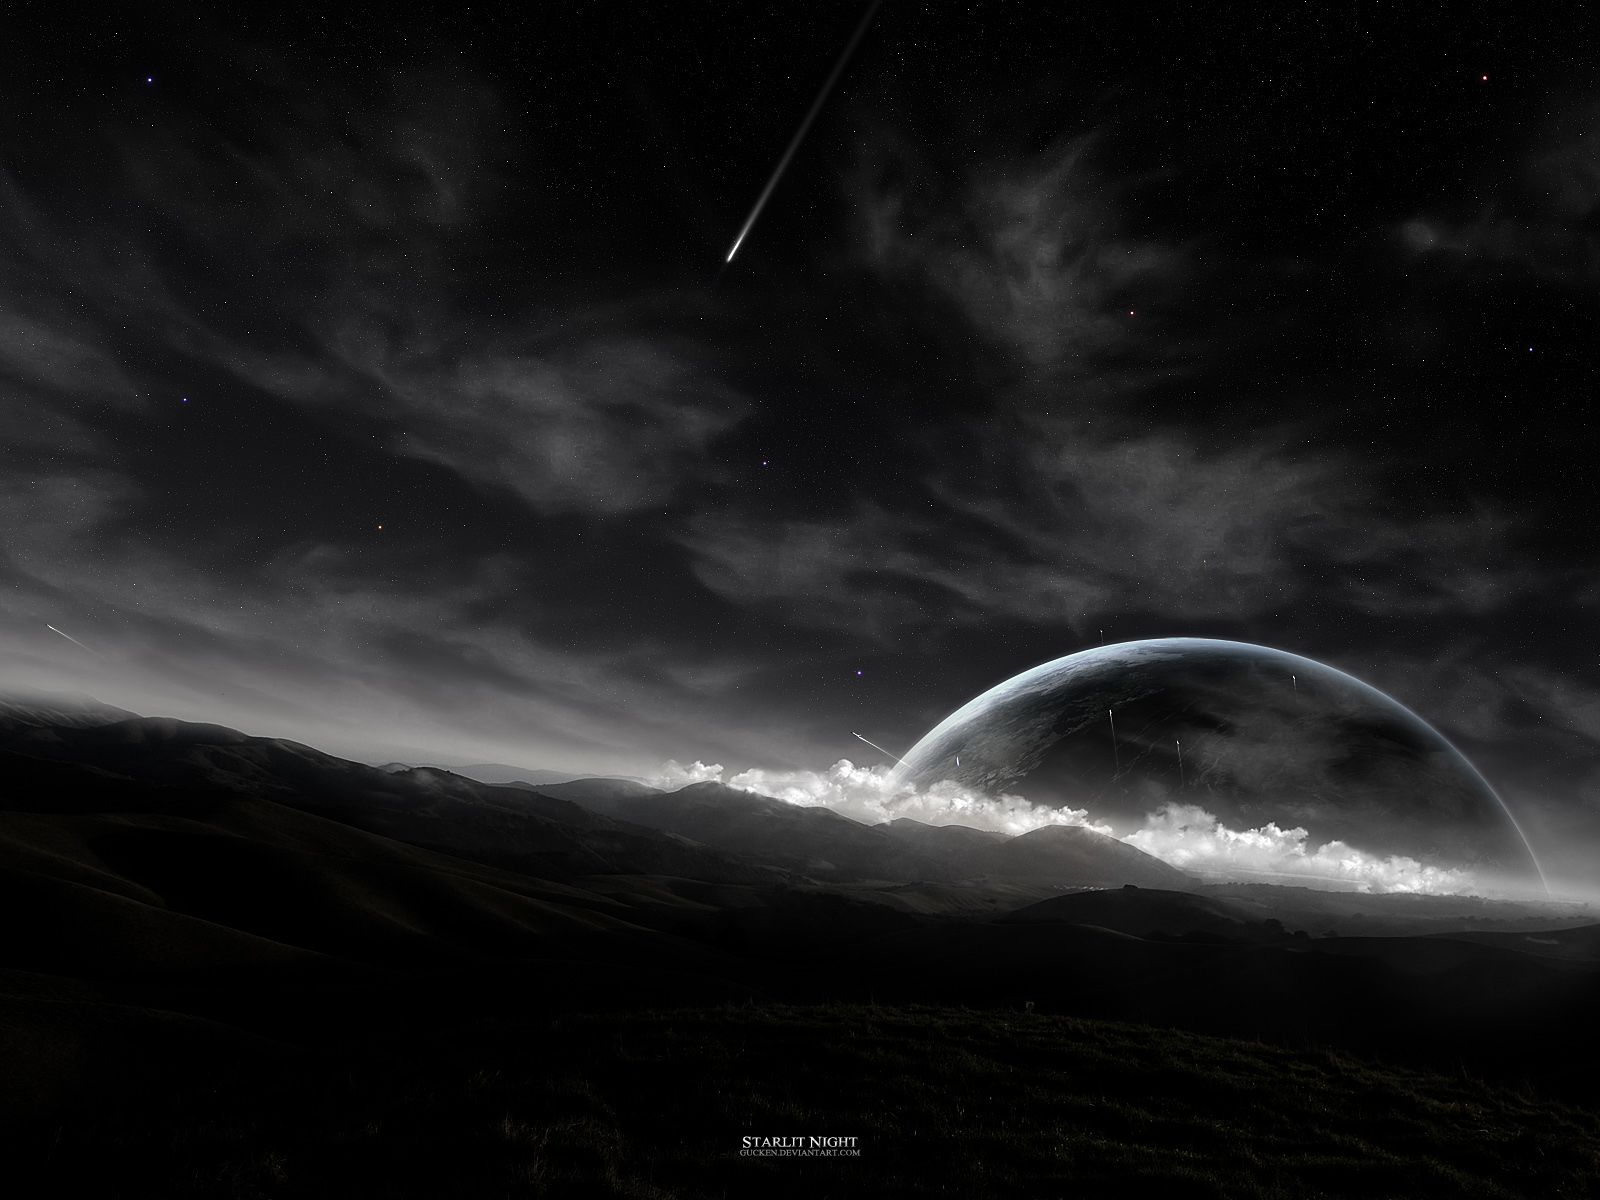 starlit_night_by_gucken